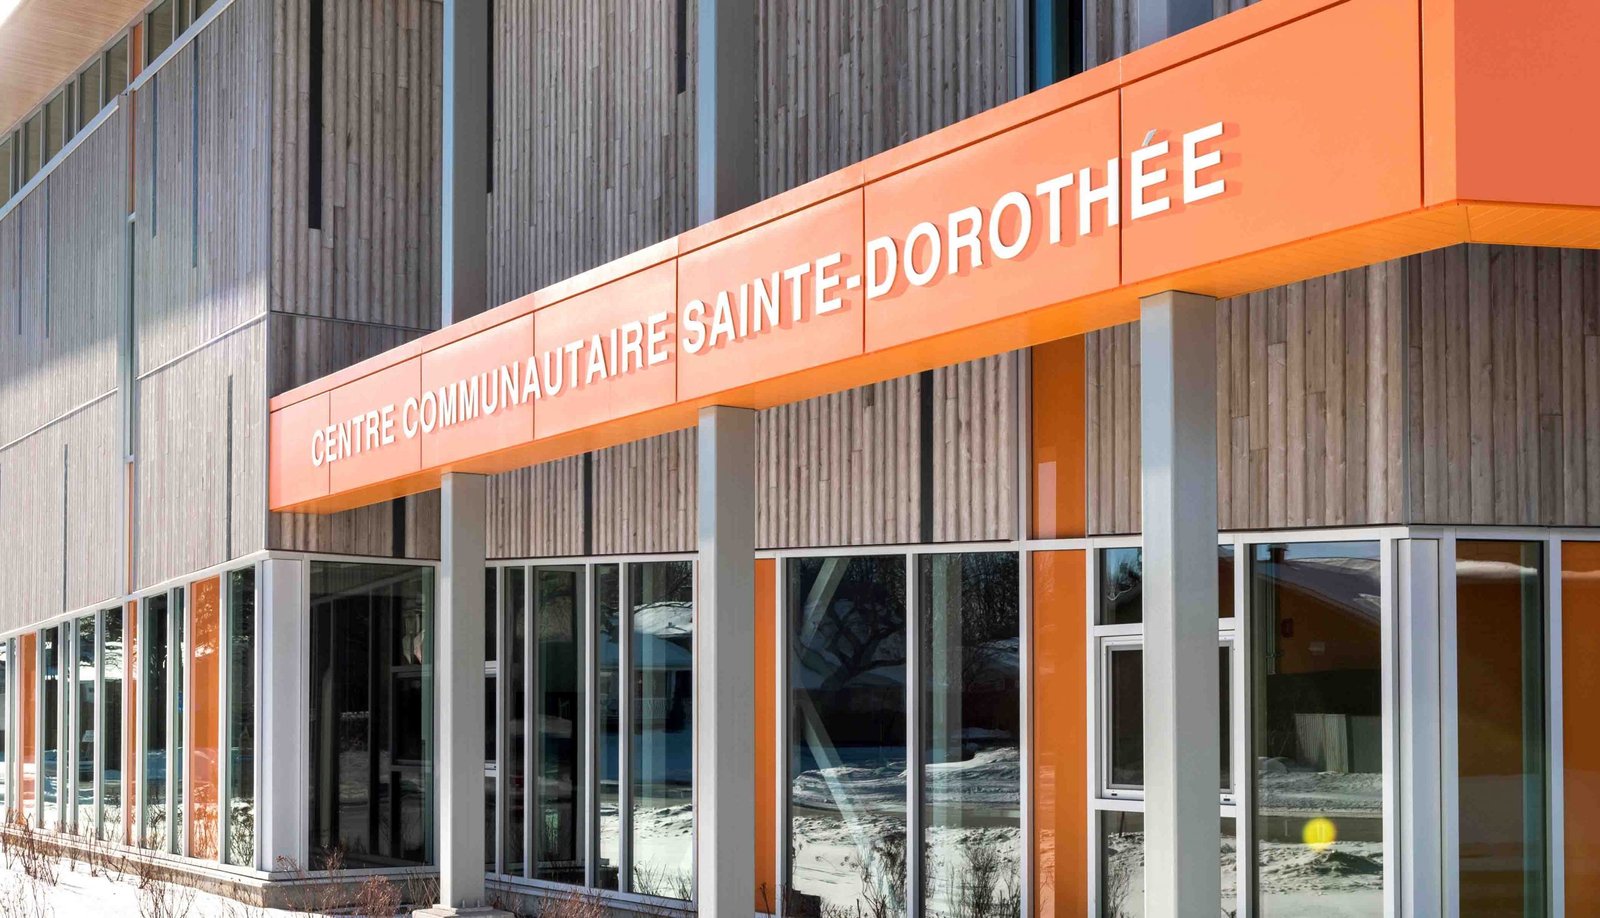 Sainte-Dorothée Community Centre certified LEED Gold